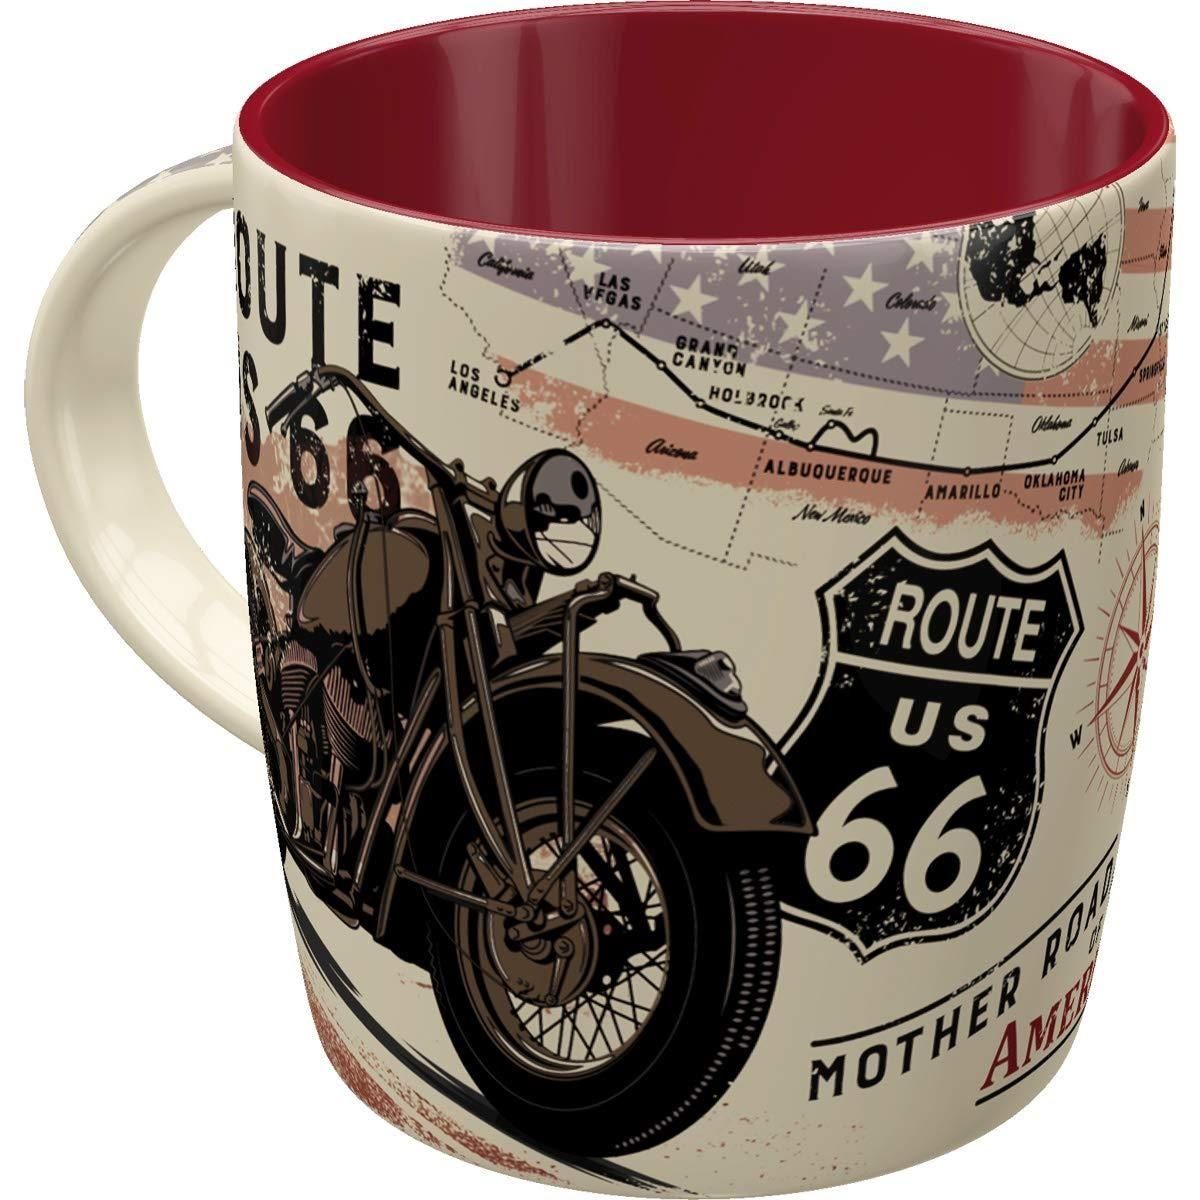 https://i.otto.de/i/otto/2052a210-6e86-559c-8a17-bd8d092f36c4/nostalgic-art-tasse-kaffeetasse-us-highways-route-66-bike-map.jpg?$formatz$